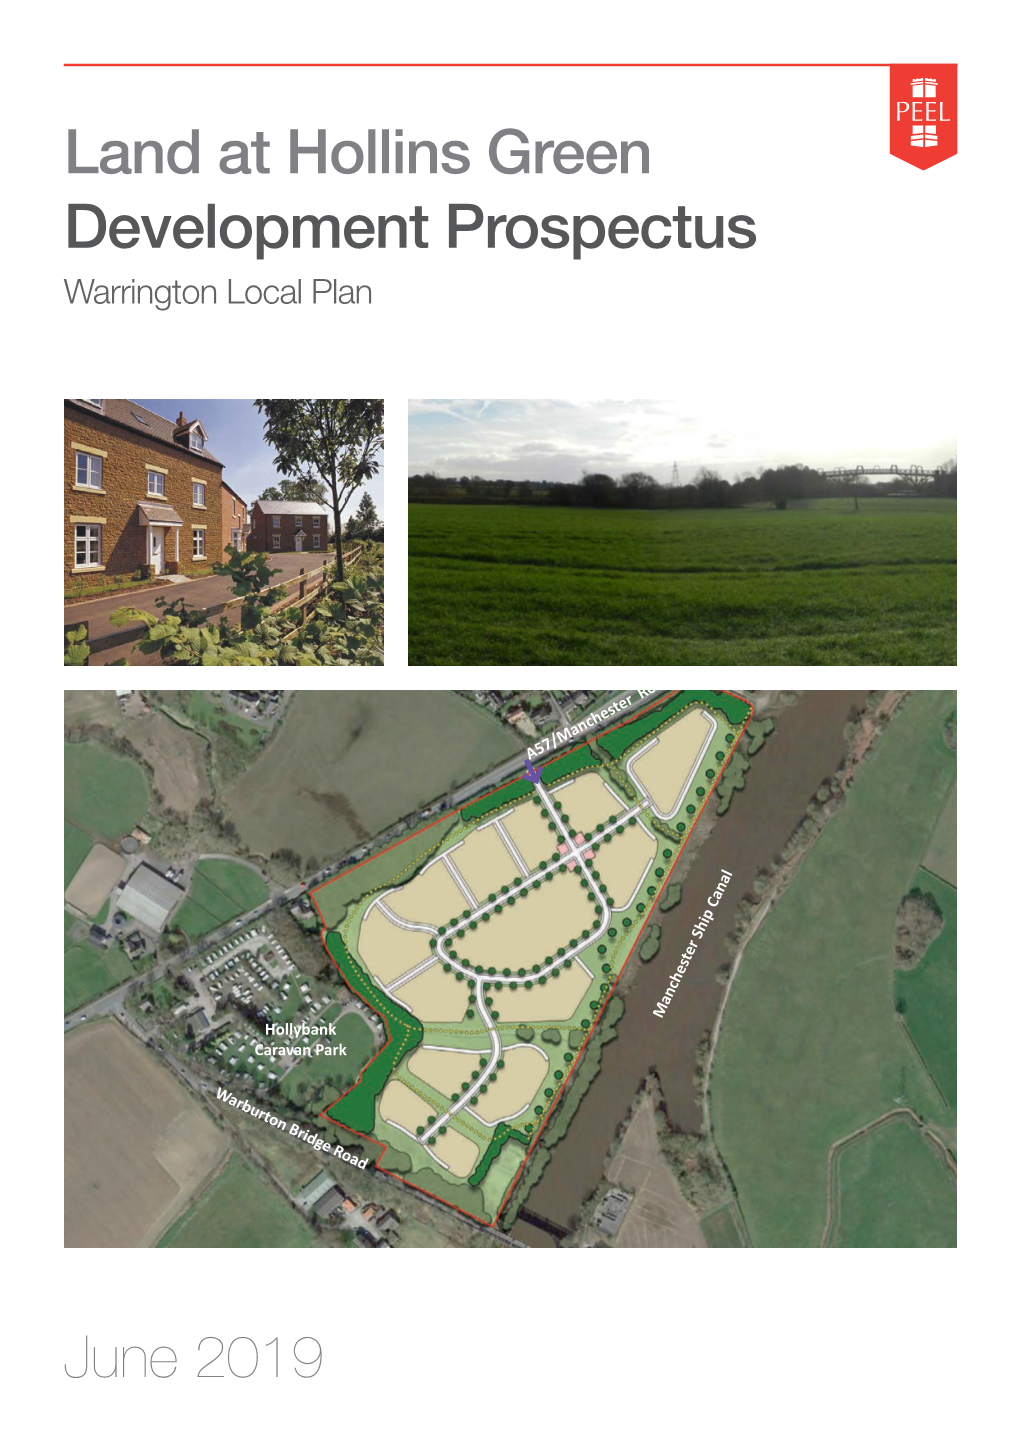 Land at Hollins Green Development Prospectus